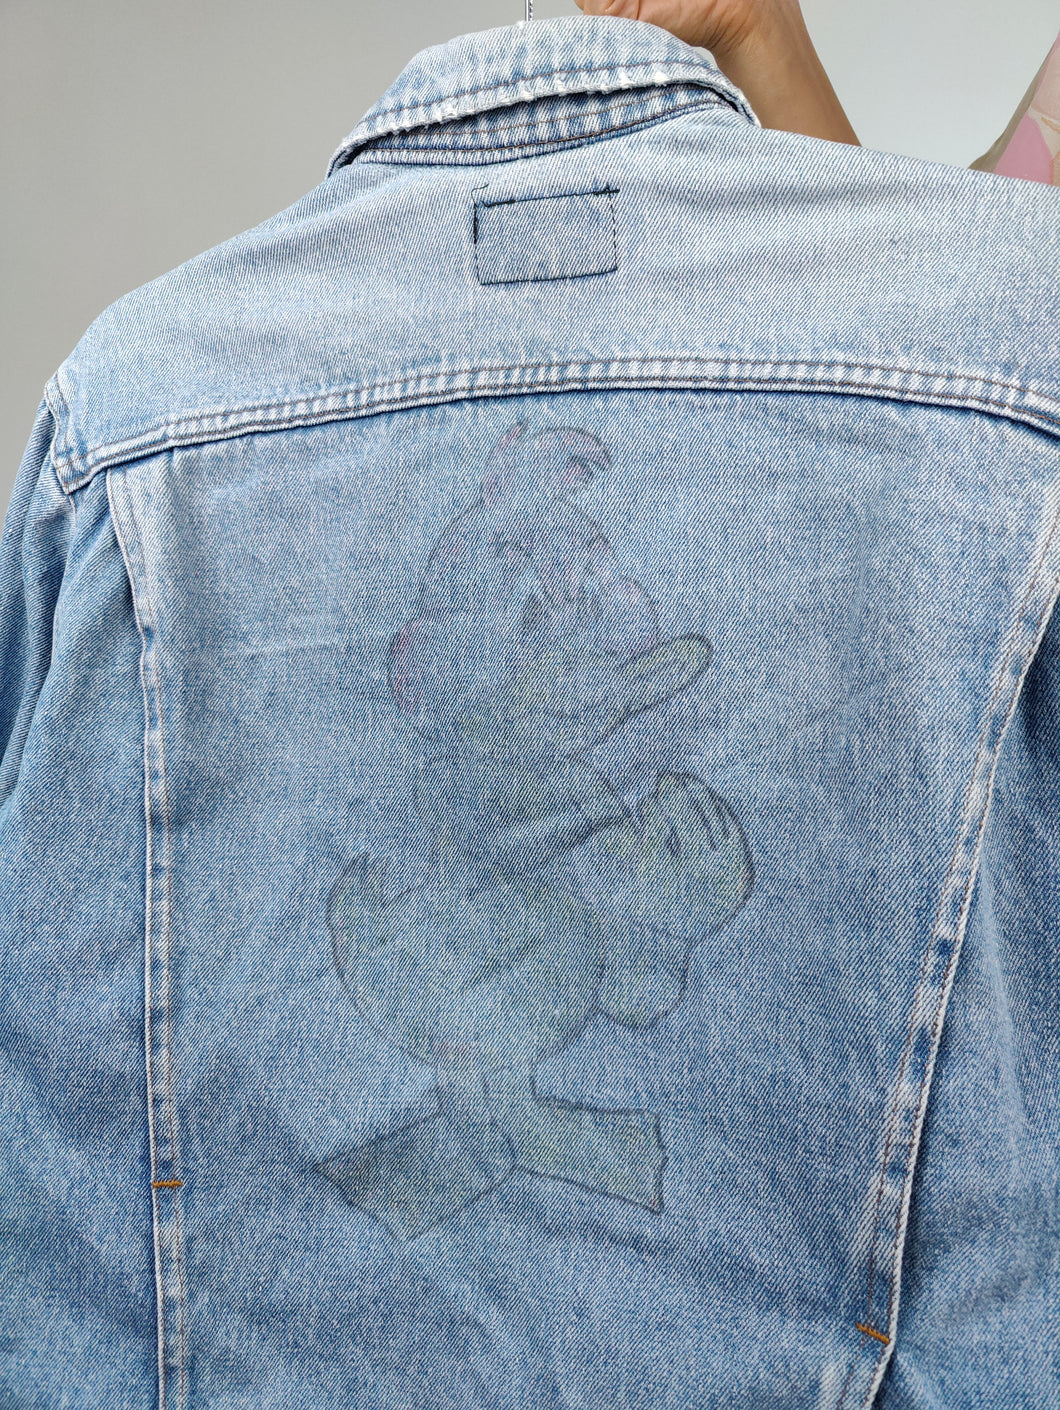 Vintage 90s denim jacket Rifle jeans light blue back print cartoon duck animal women S-M